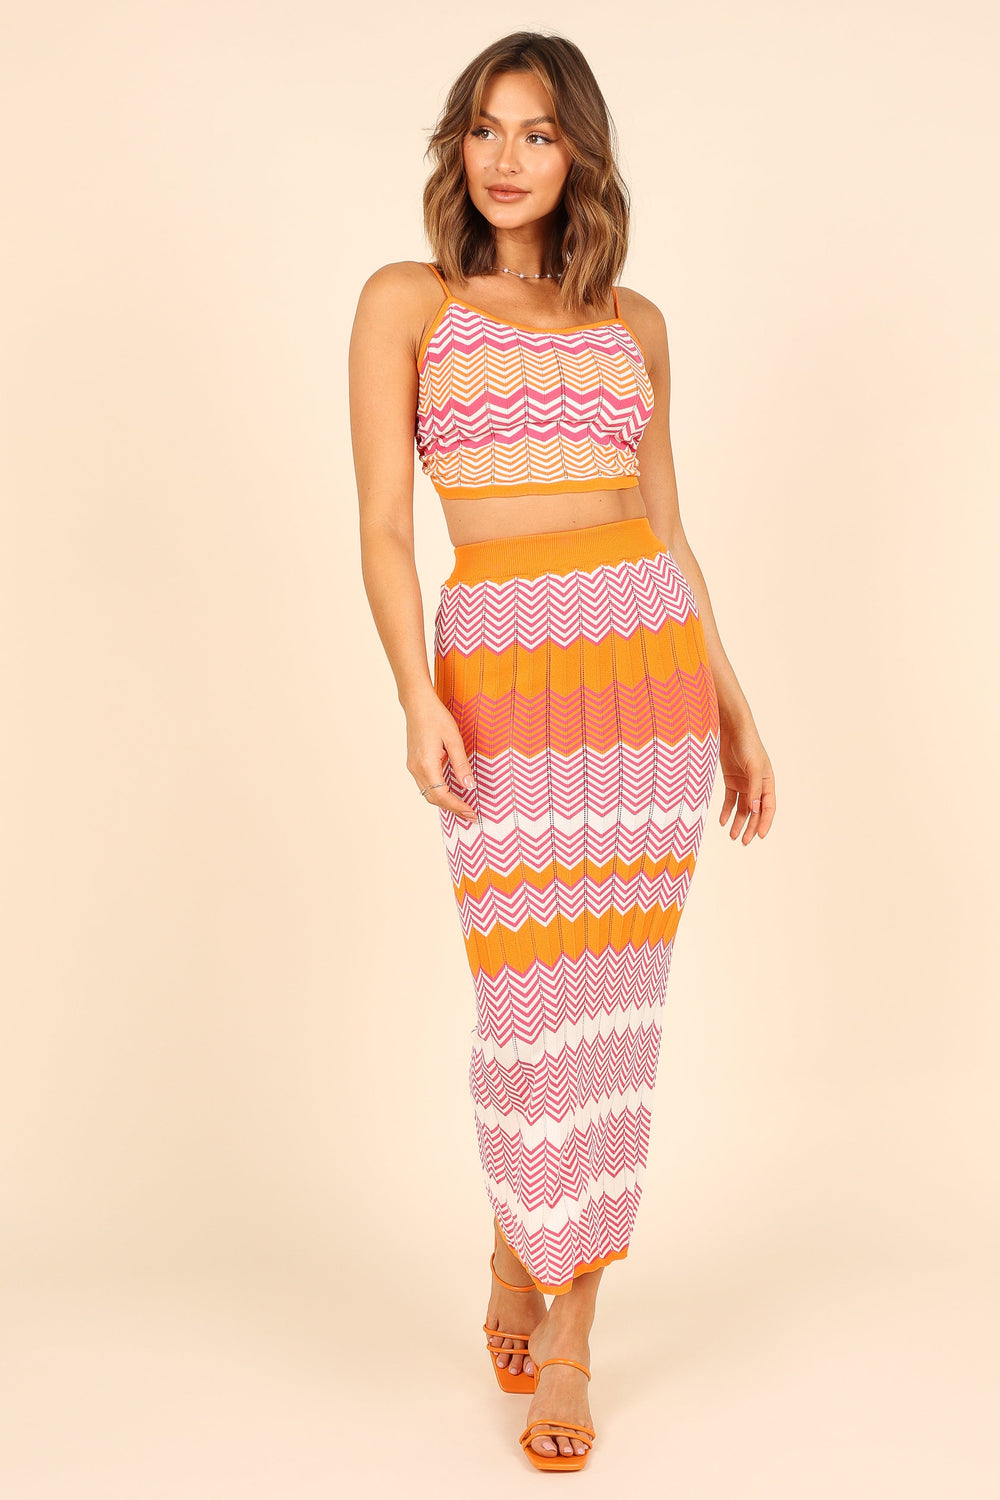 SETS @Summer Crochet Two Piece Set - Pink (waiting on bulk)